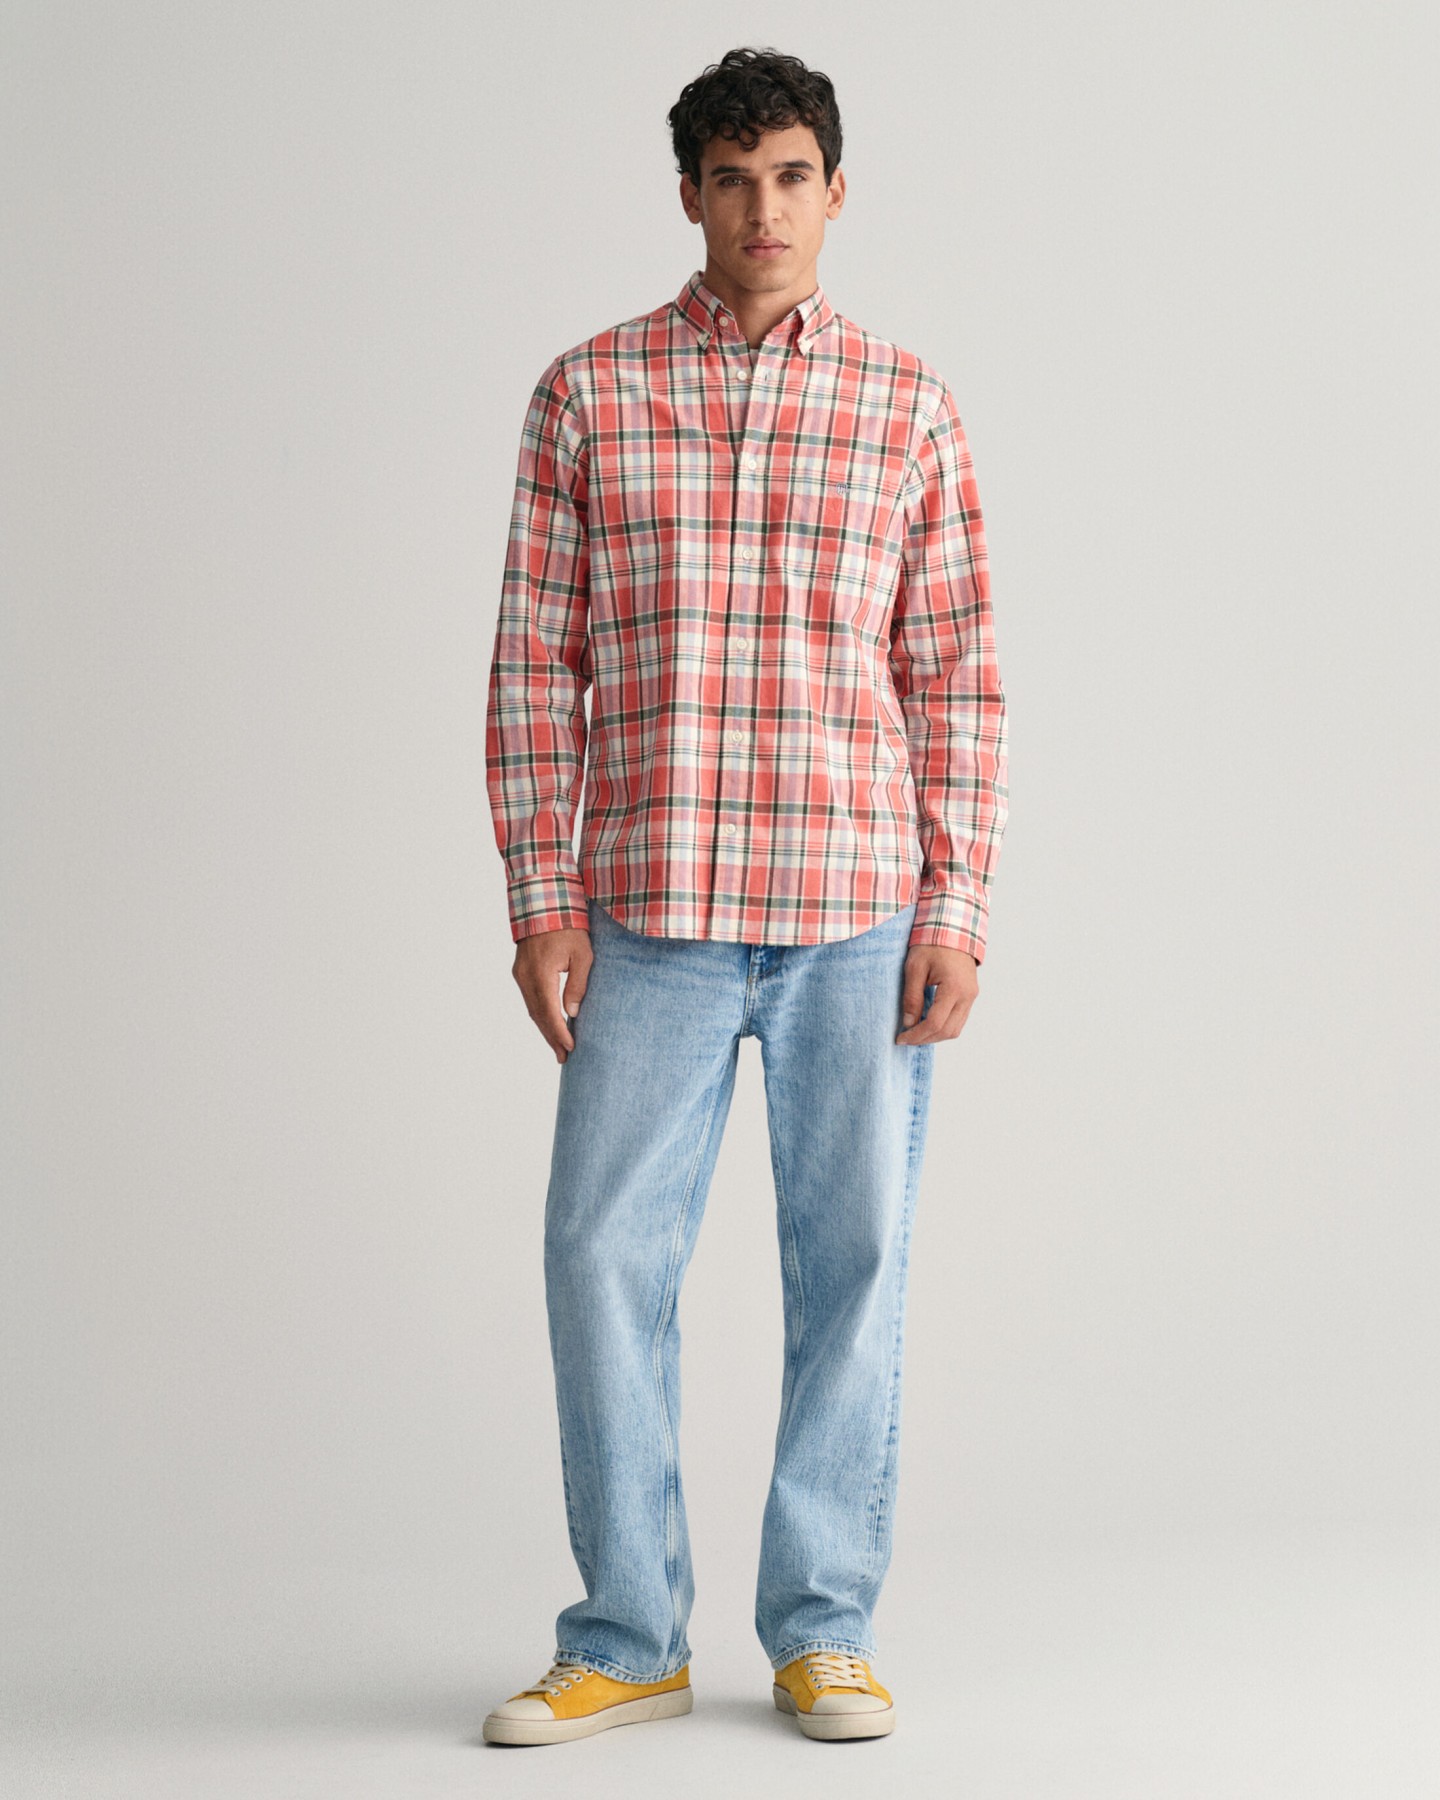 Gant Cotton/ Linen Check Shirt - Pink